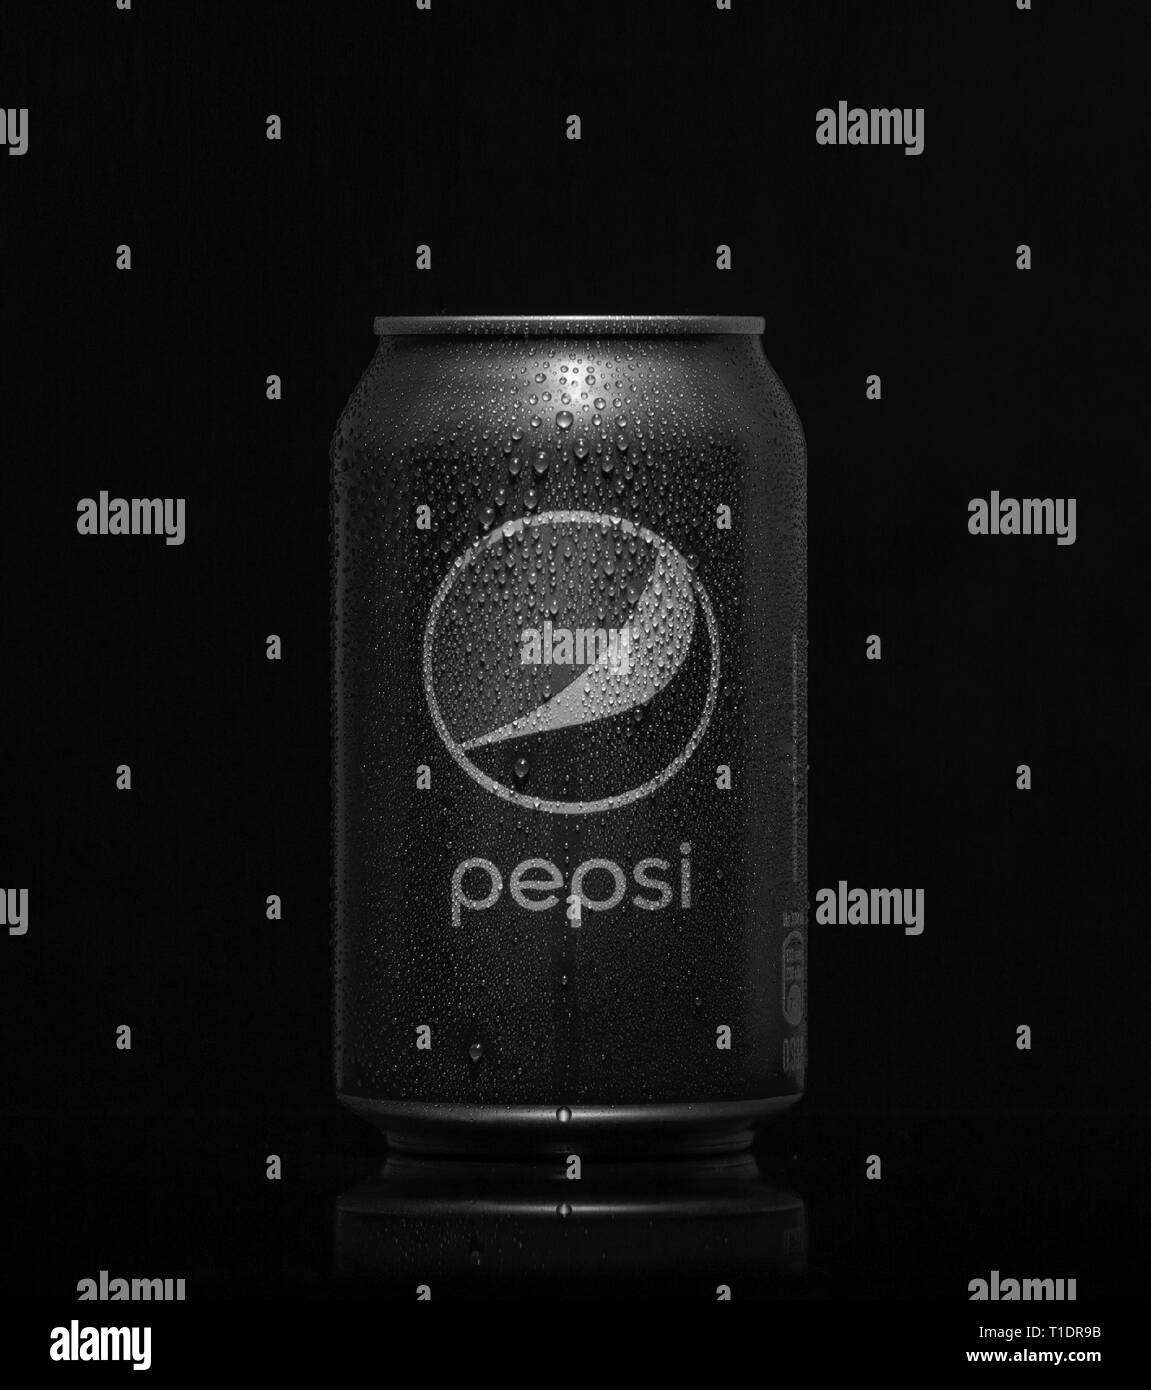 Pepsi brand Black and White Stock Photos & Images - Alamy